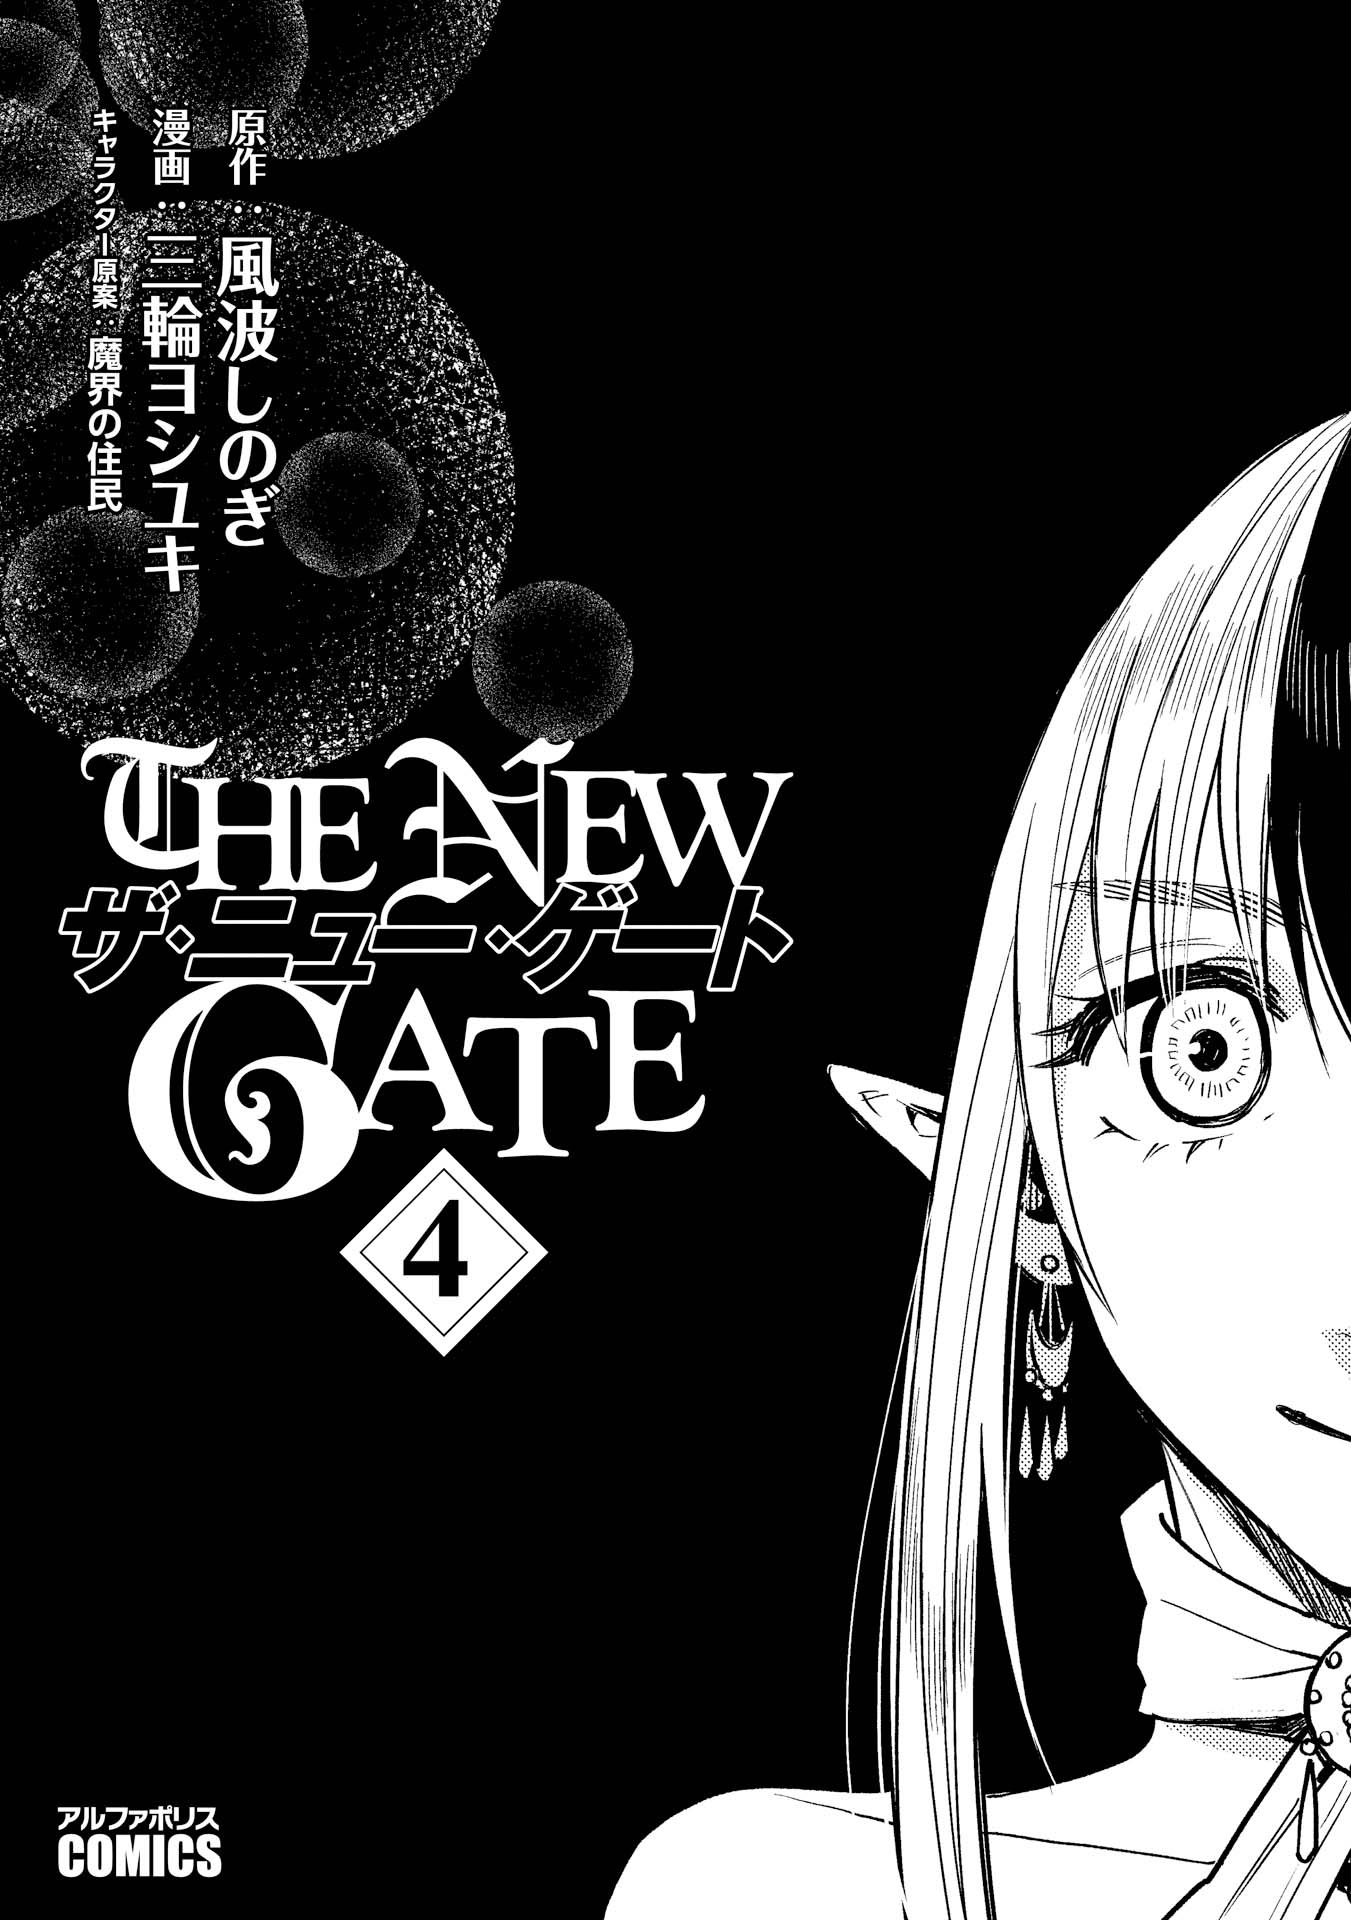 Read The New Gate Manga English New Chapters Online Free Mangaclash